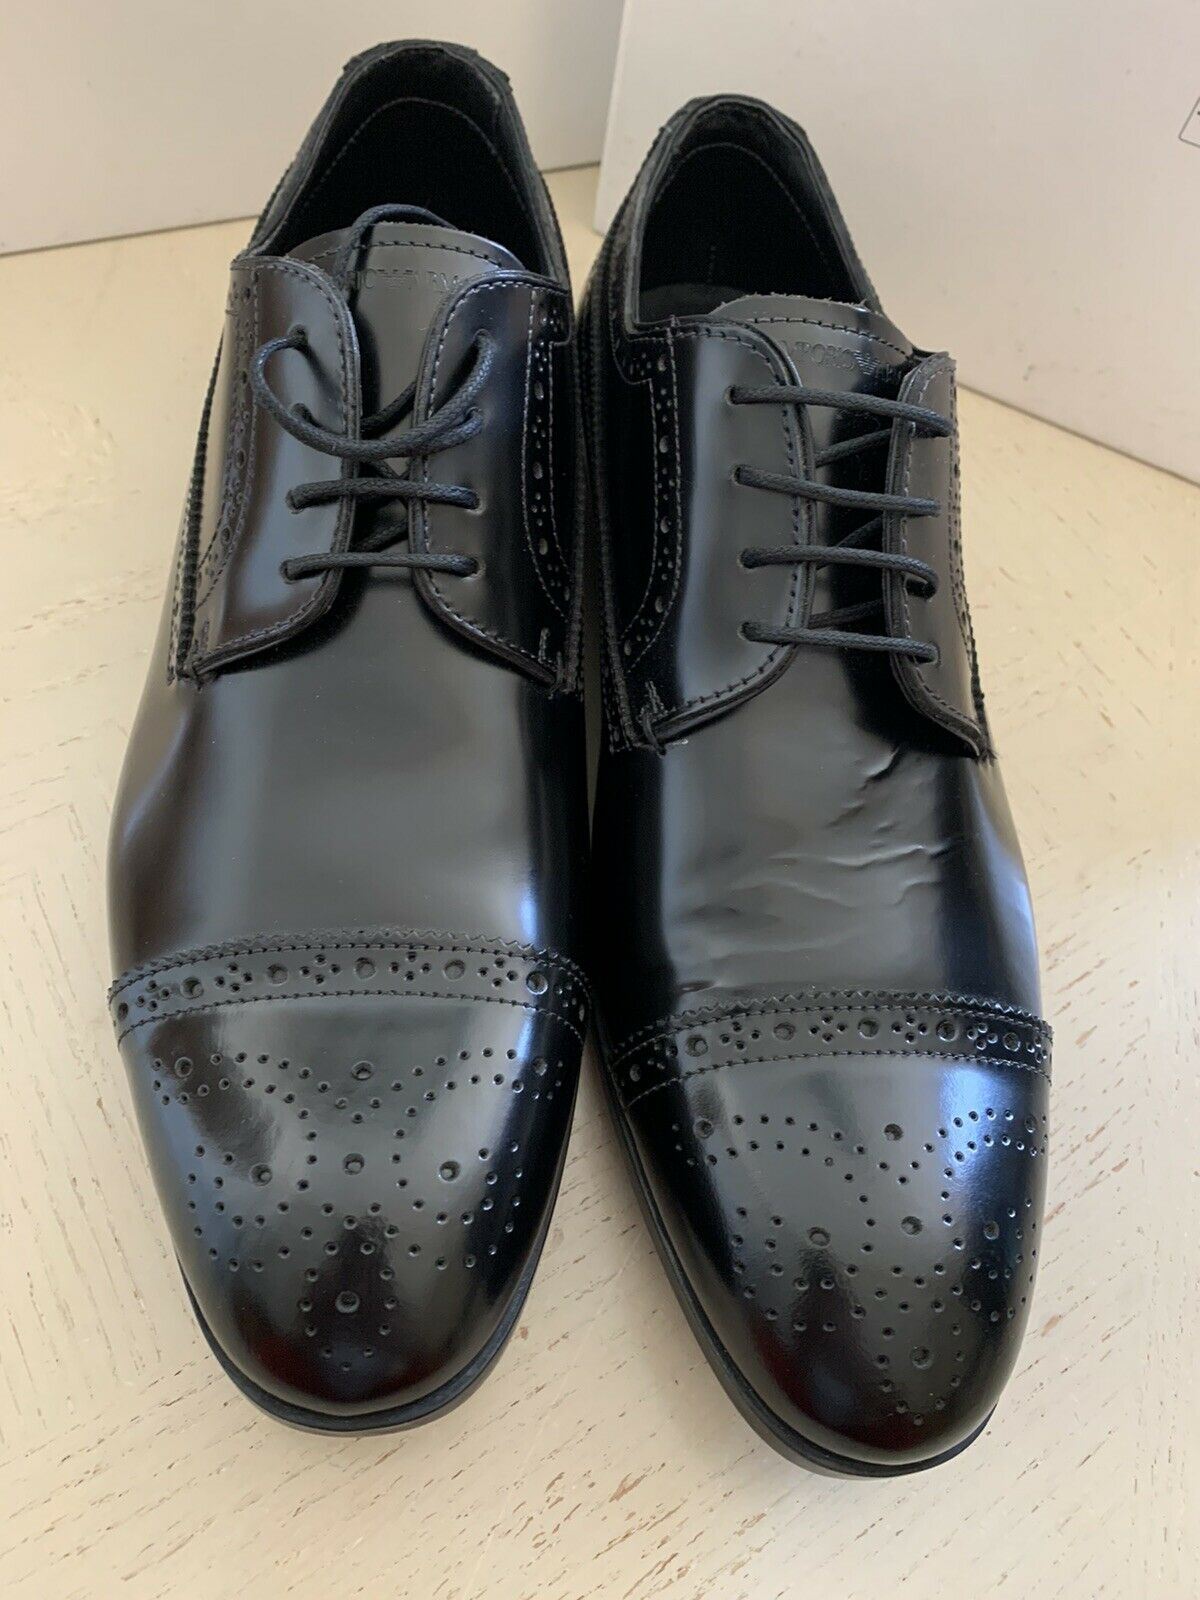 New $495 Emporio Armani Mens Oxfords Shoes Black 10 US/9 UK